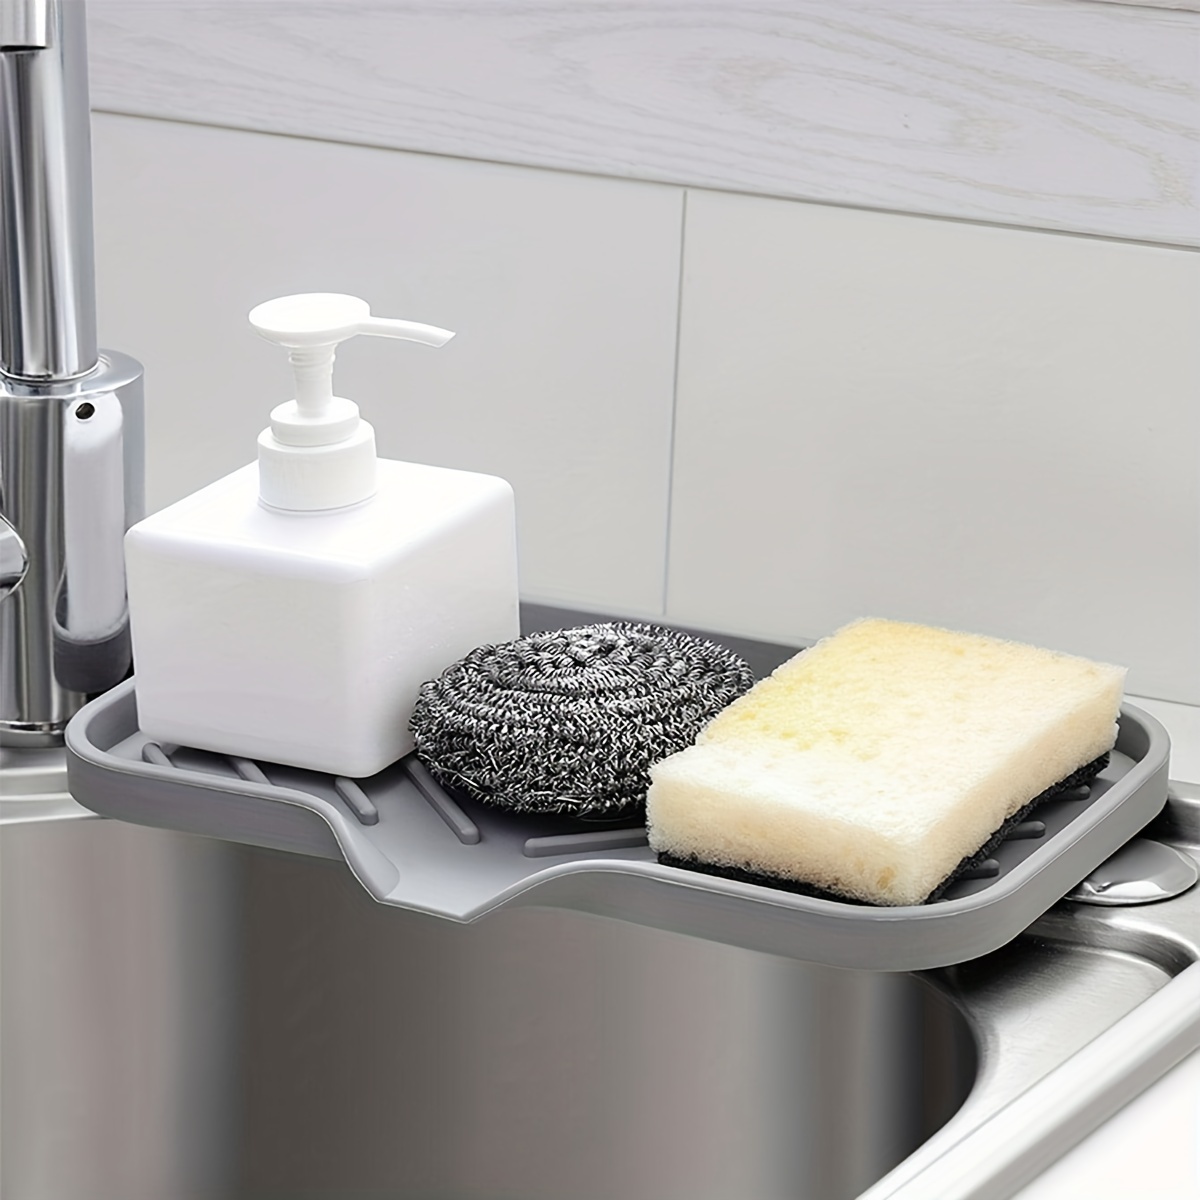 Silicone Sponge Holder - Kitchen Sink Organizer Tray for Sponges Soap  Dispenser Scrubber - Silicone Kitchen Sink Organizer Caddy Tray - Soap  Holder 